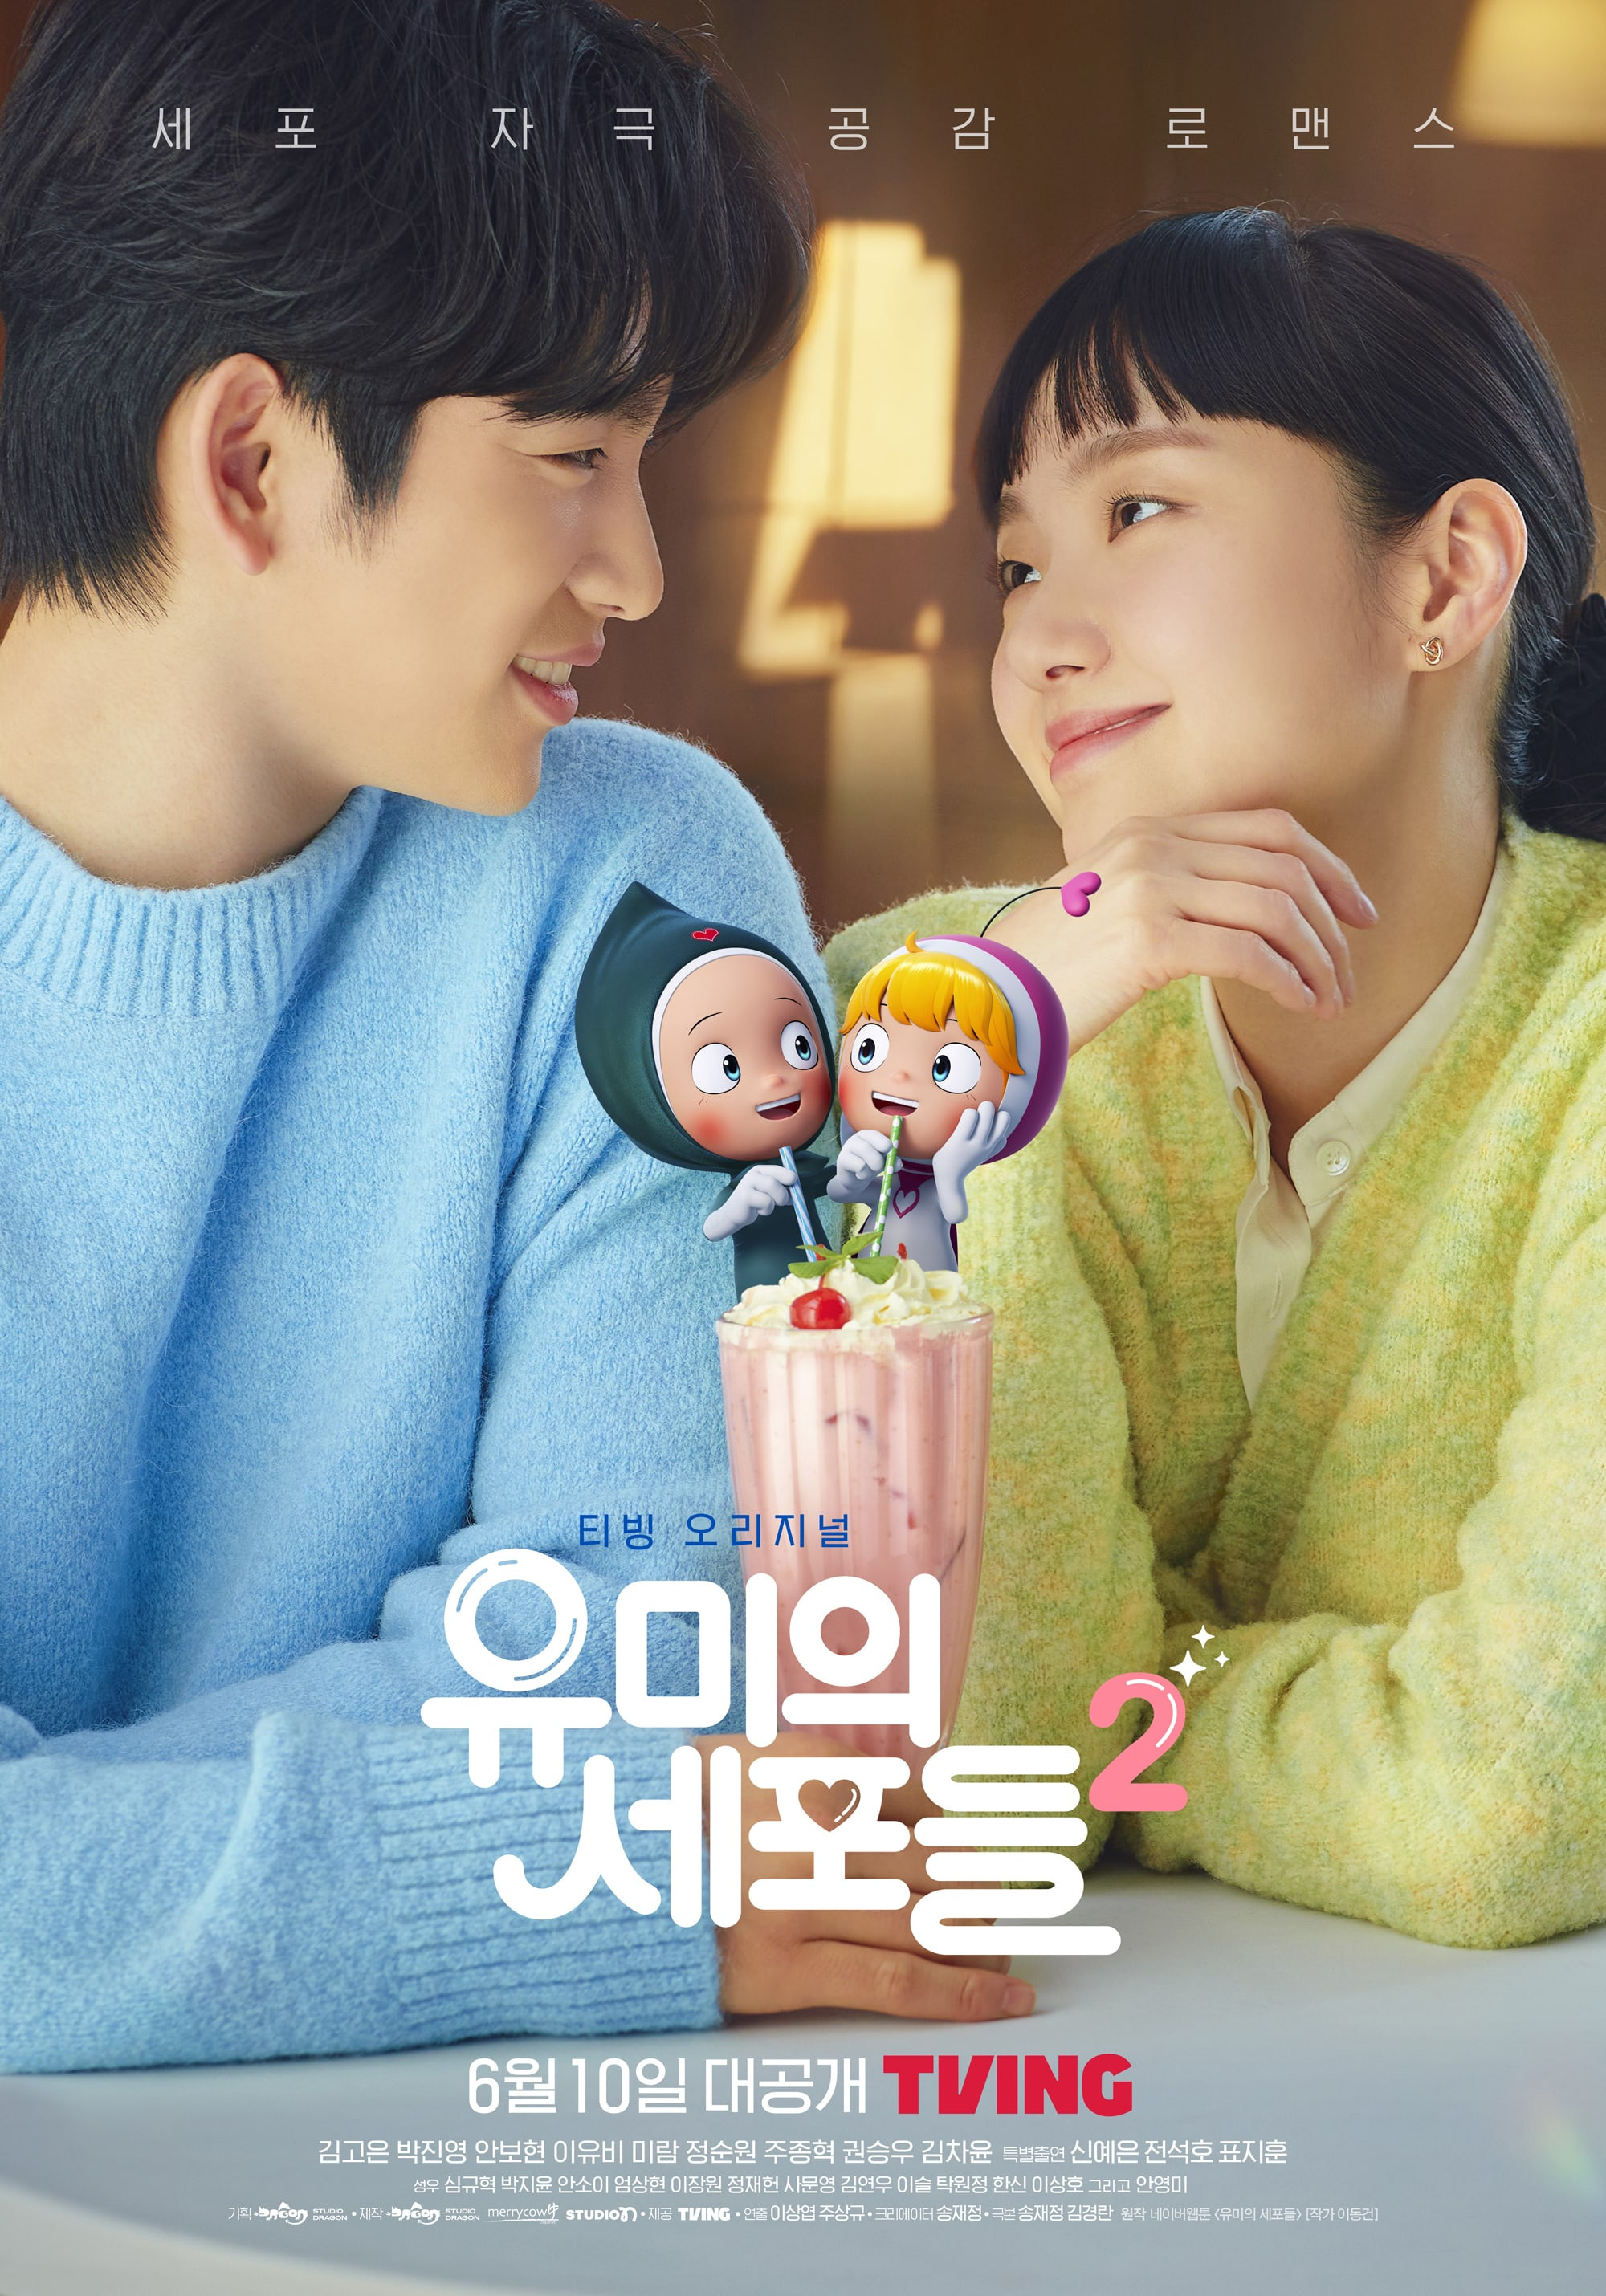 Kim Go Eun And GOT7's Jinyoung Exchange Sweet Eye Contact In “Yumi's Cells 2”  Poster | Soompi